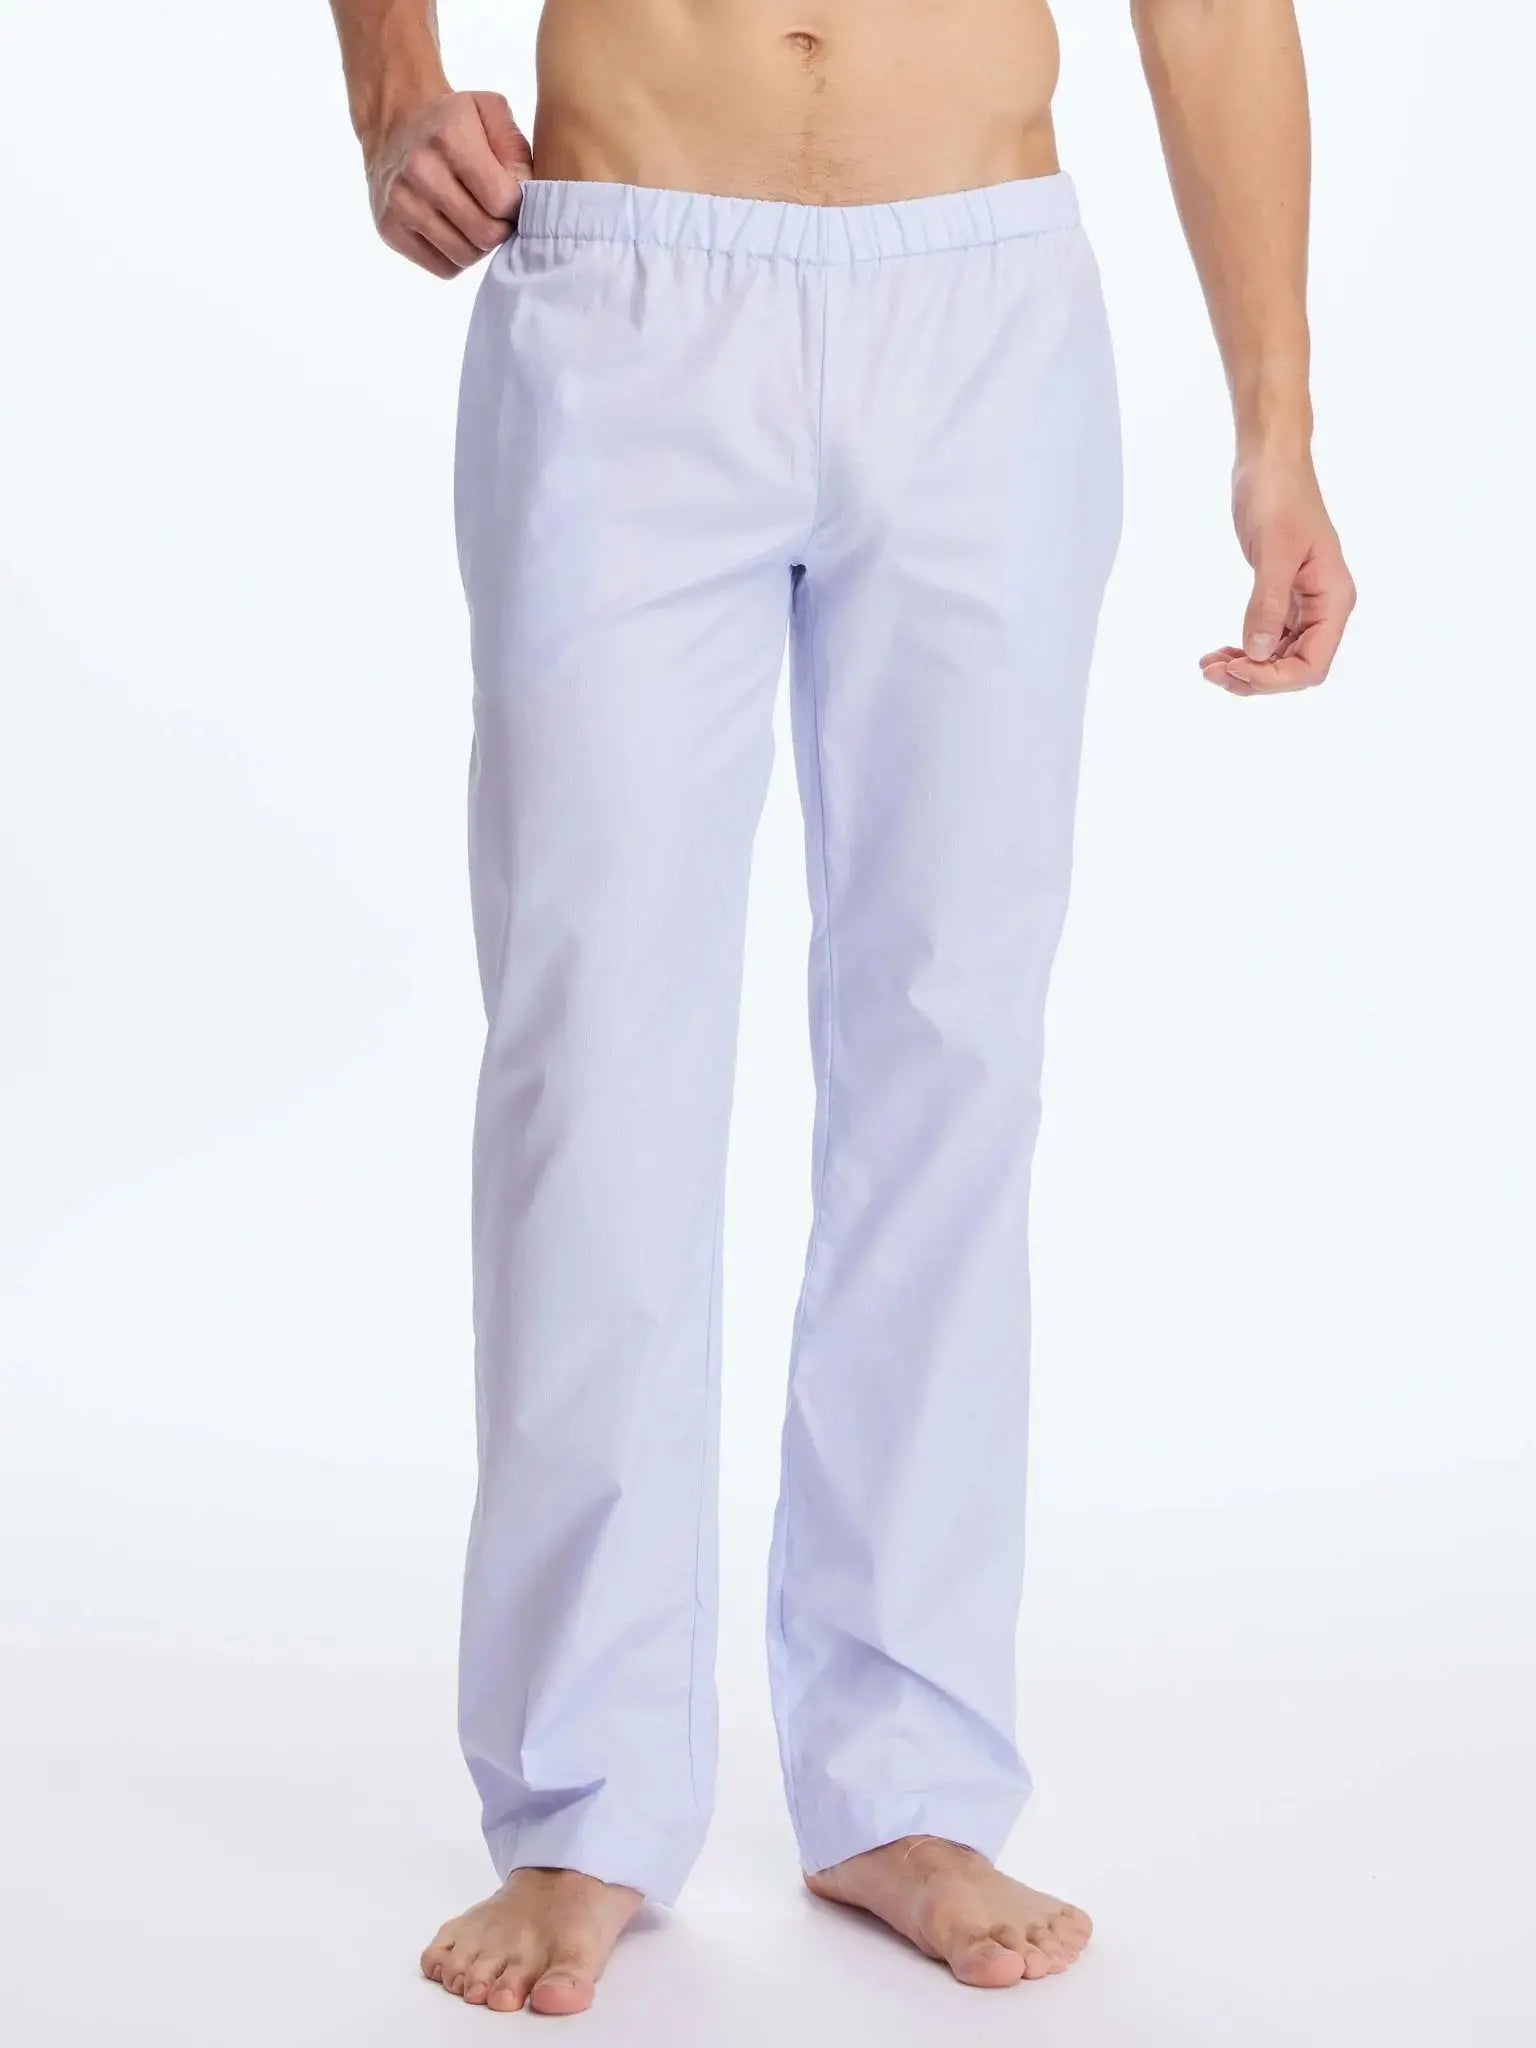 Unique Premium Quality Solid White Cotton Blend Pajama/Night Pants/Trouser/Lounge  Pants Use For Men